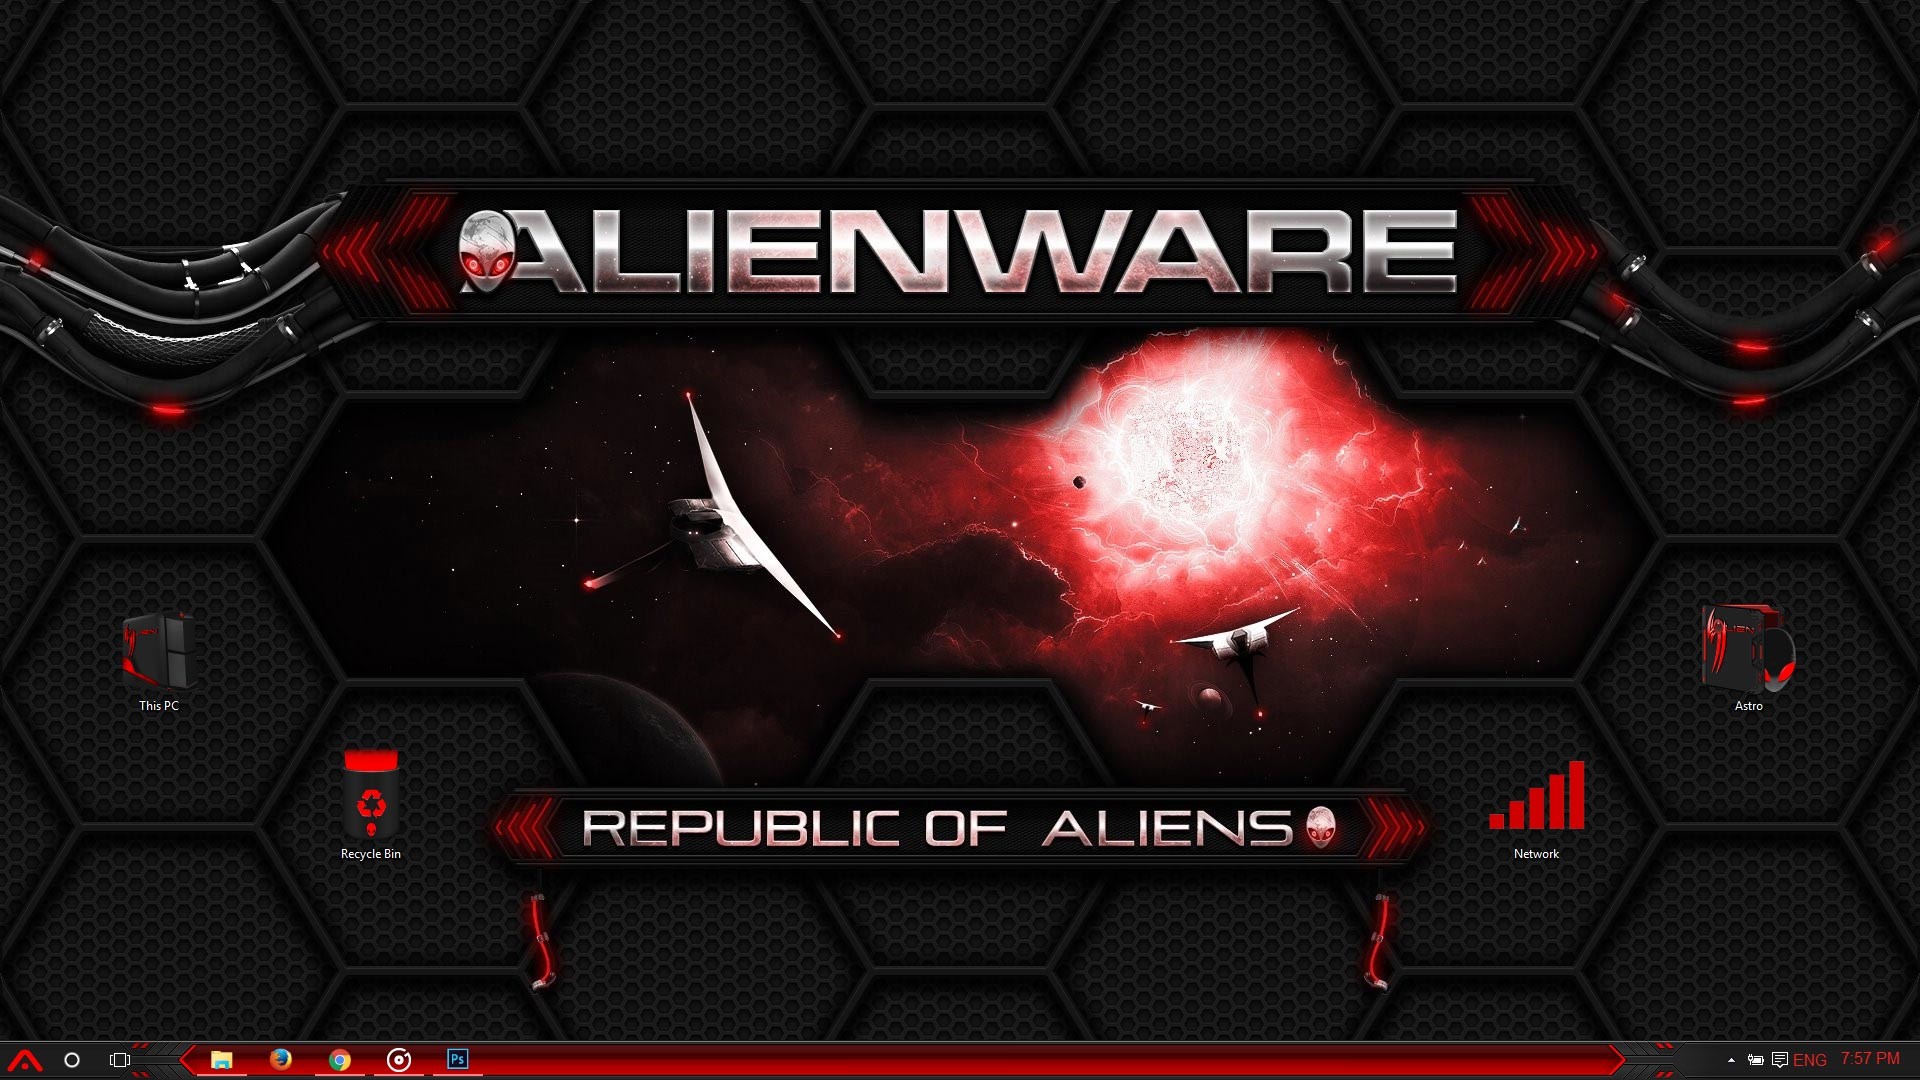 Alienware Windows 10 Theme - Alienware Red Background - HD Wallpaper 